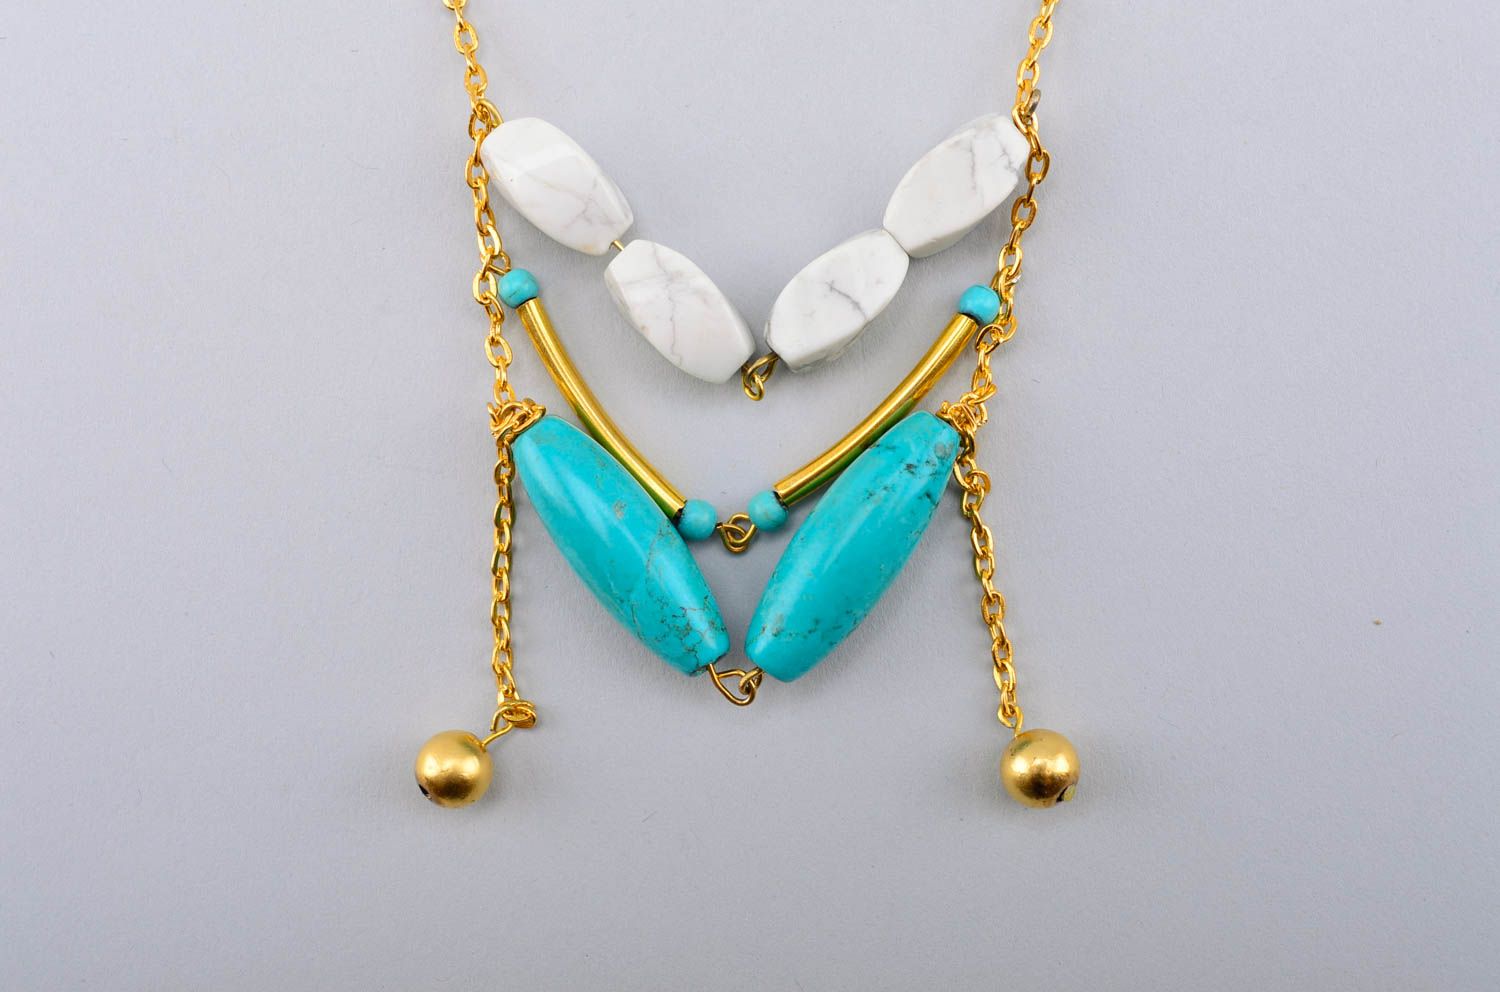 Handmade necklace unusual necklace gift ideas designer accessory elite jewelry photo 3